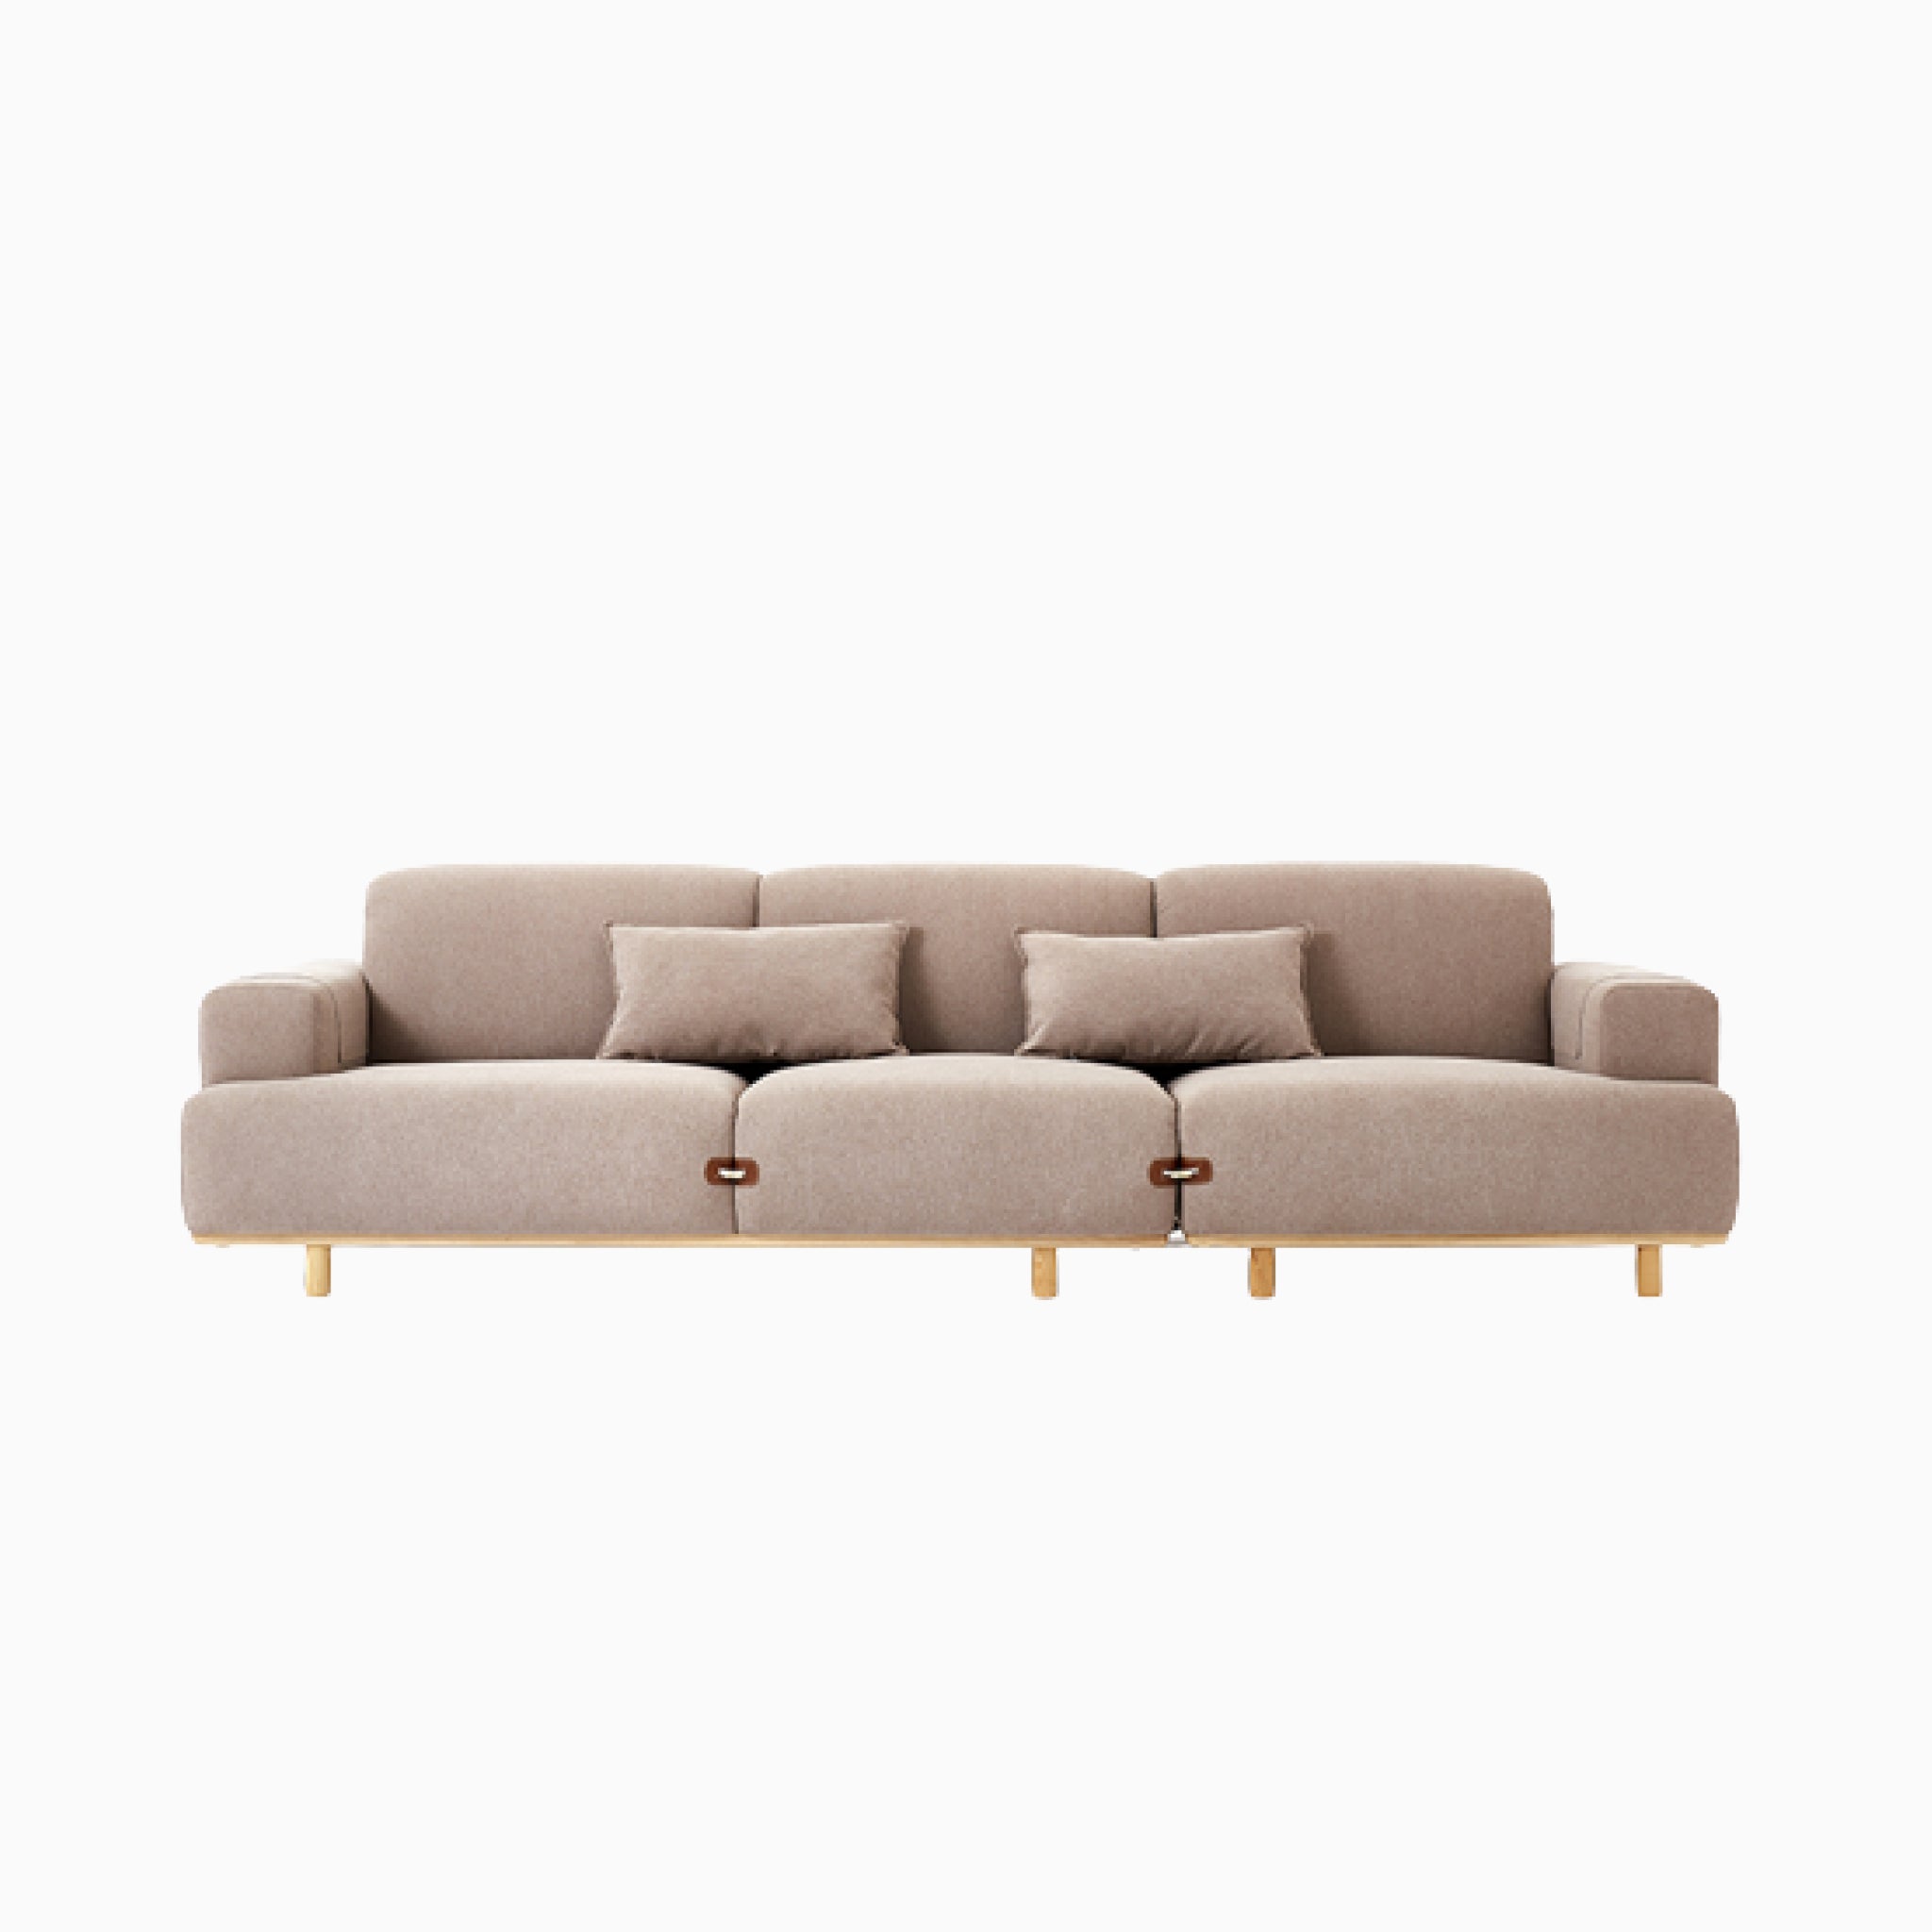 Adeline Three Seater Sofa, Linen, Beige